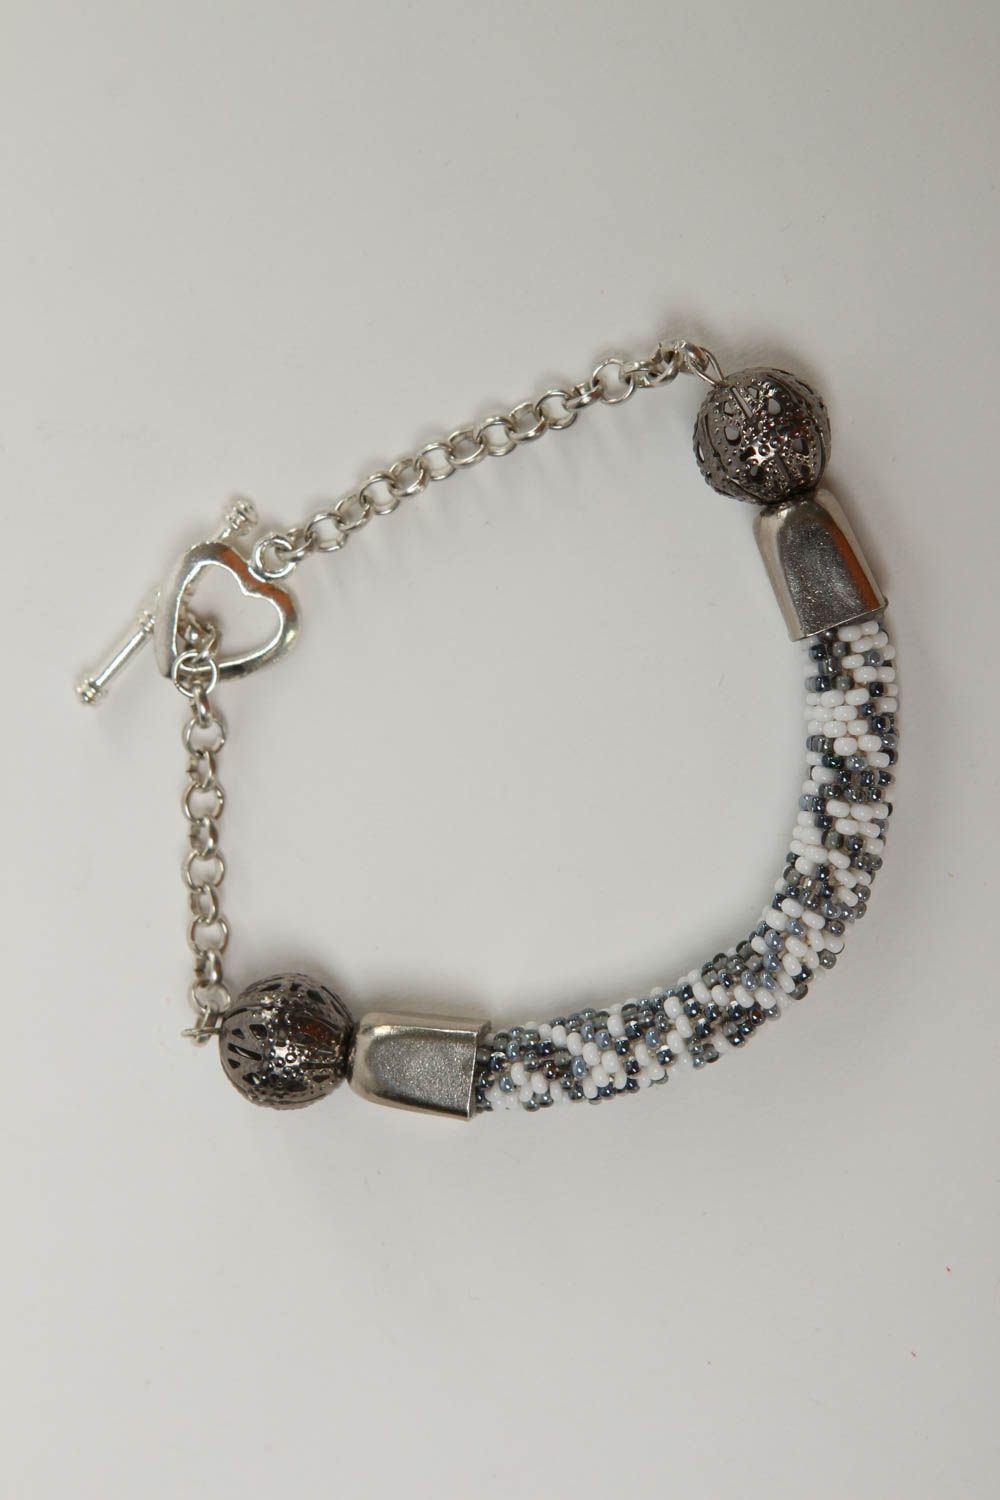 Beaded cord bracelet handmade wrist bracelet designer stylish jewelry photo 2